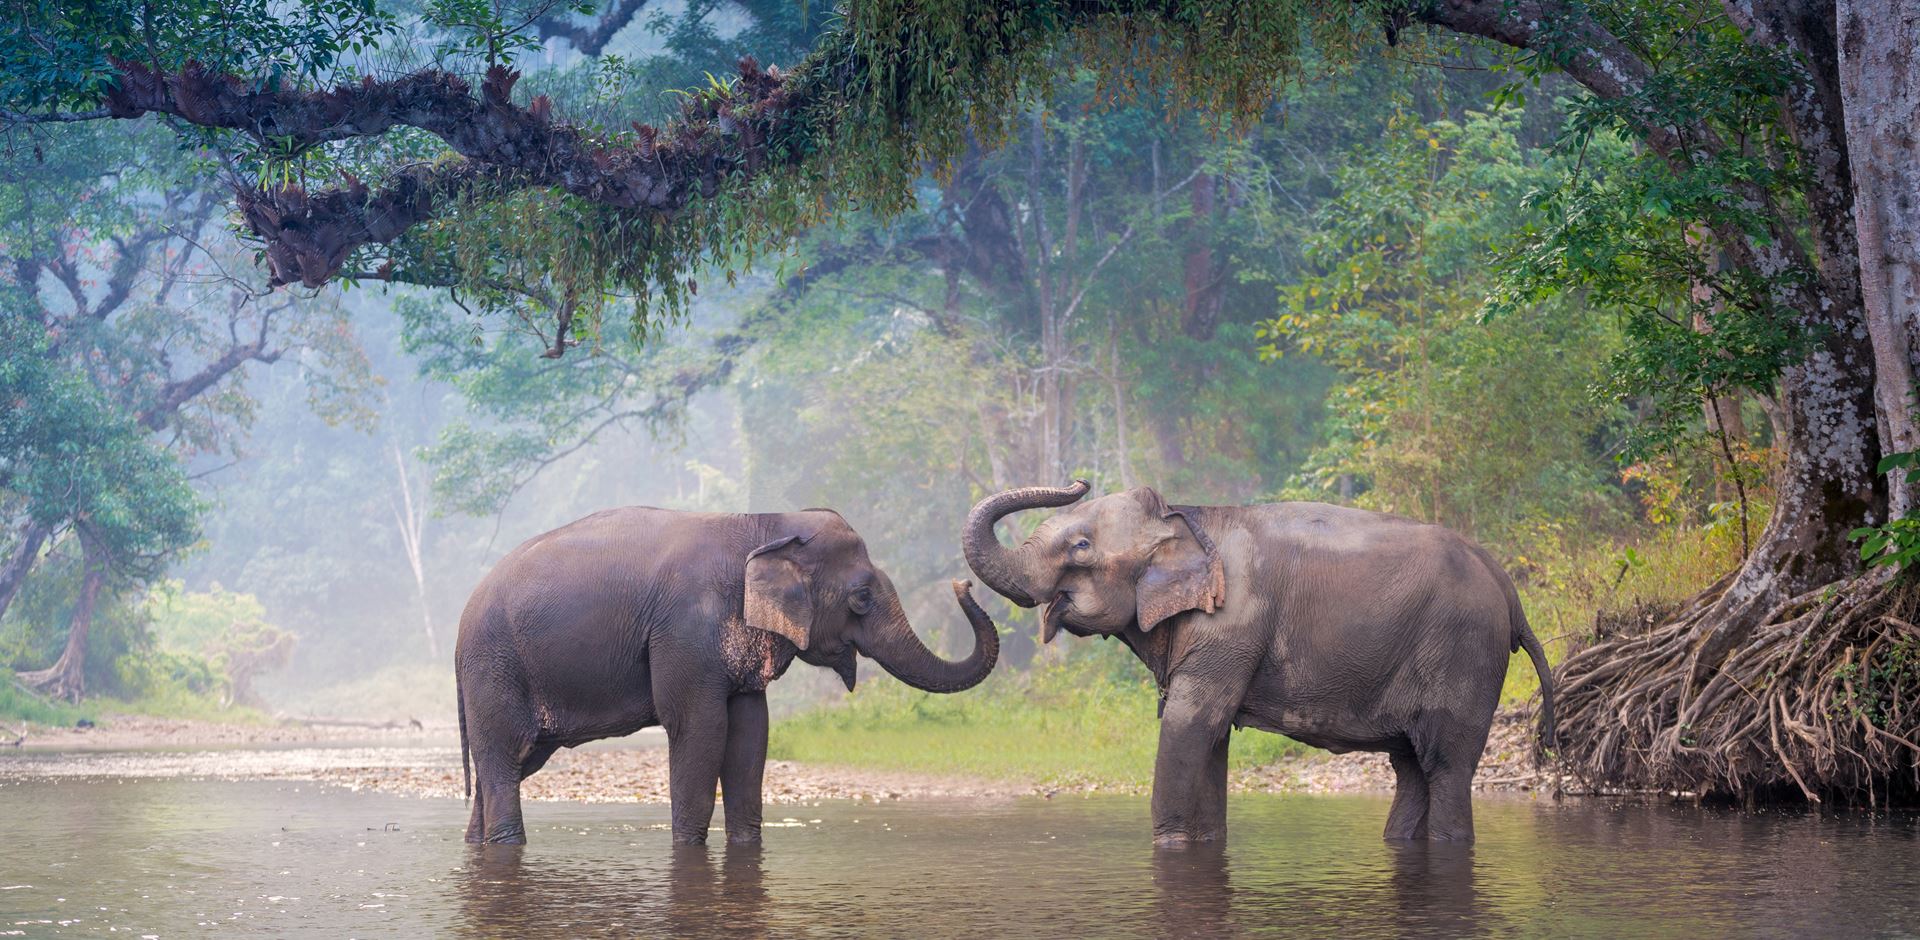 Thailand, Chiang Mai, The Bush Camp, Elephants walking